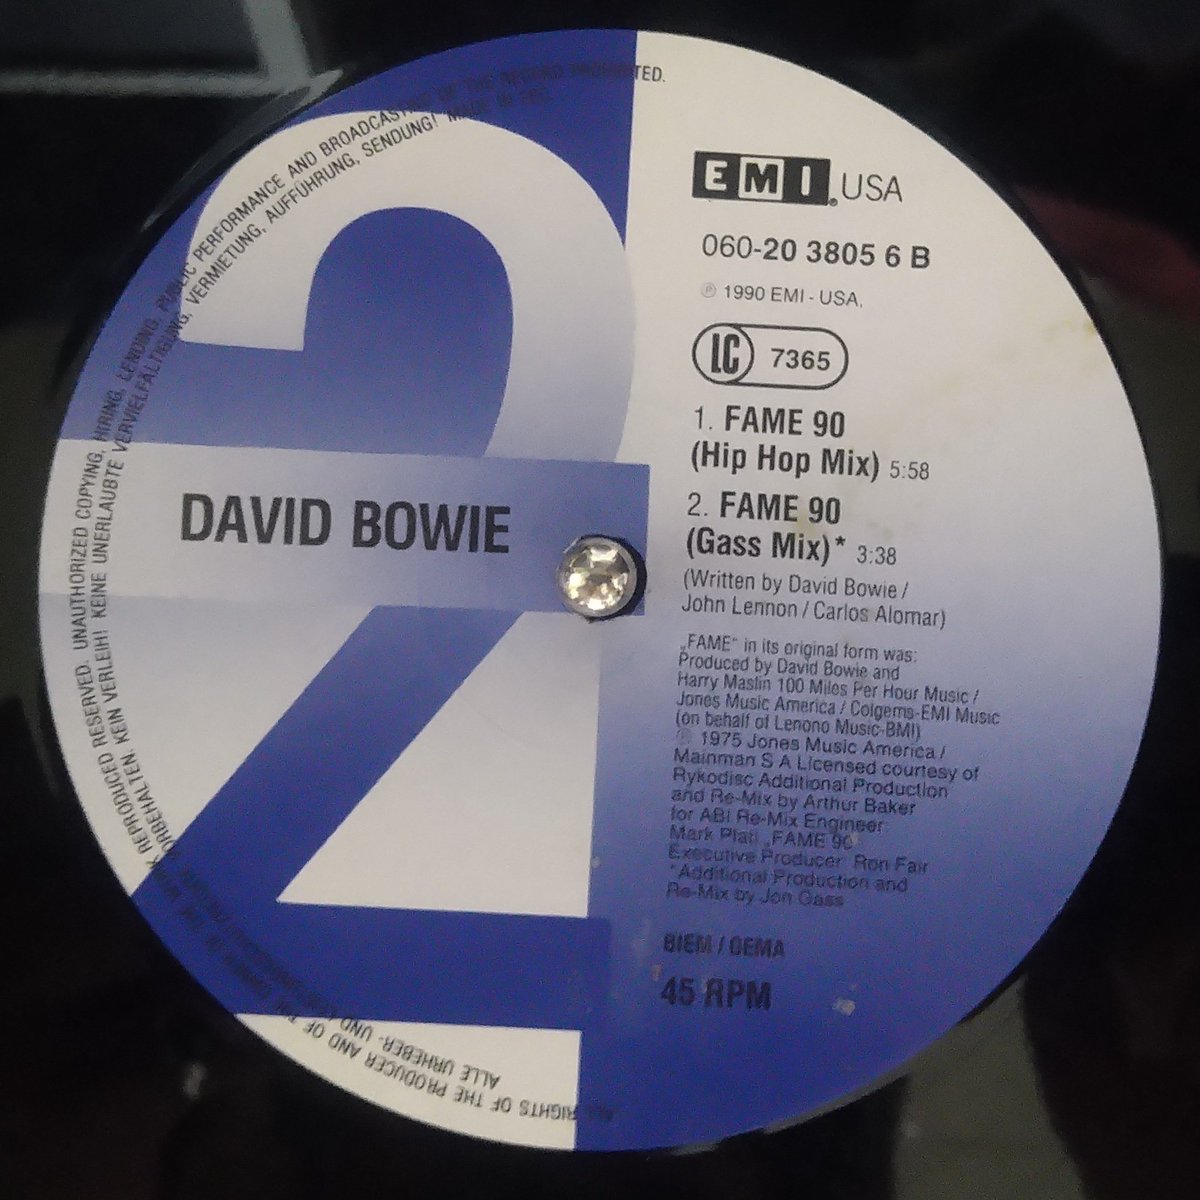 Now playing David Bowie's 12inch single 'Fame 90(House Mix)' c/w 'Fame 90(Hip Hop Mix)' & Fame 90(Gass Mix)', vinyl edition. #davidbowie #johnlennon #carlosalomar #uk #90s #12inchsingle #vinyl